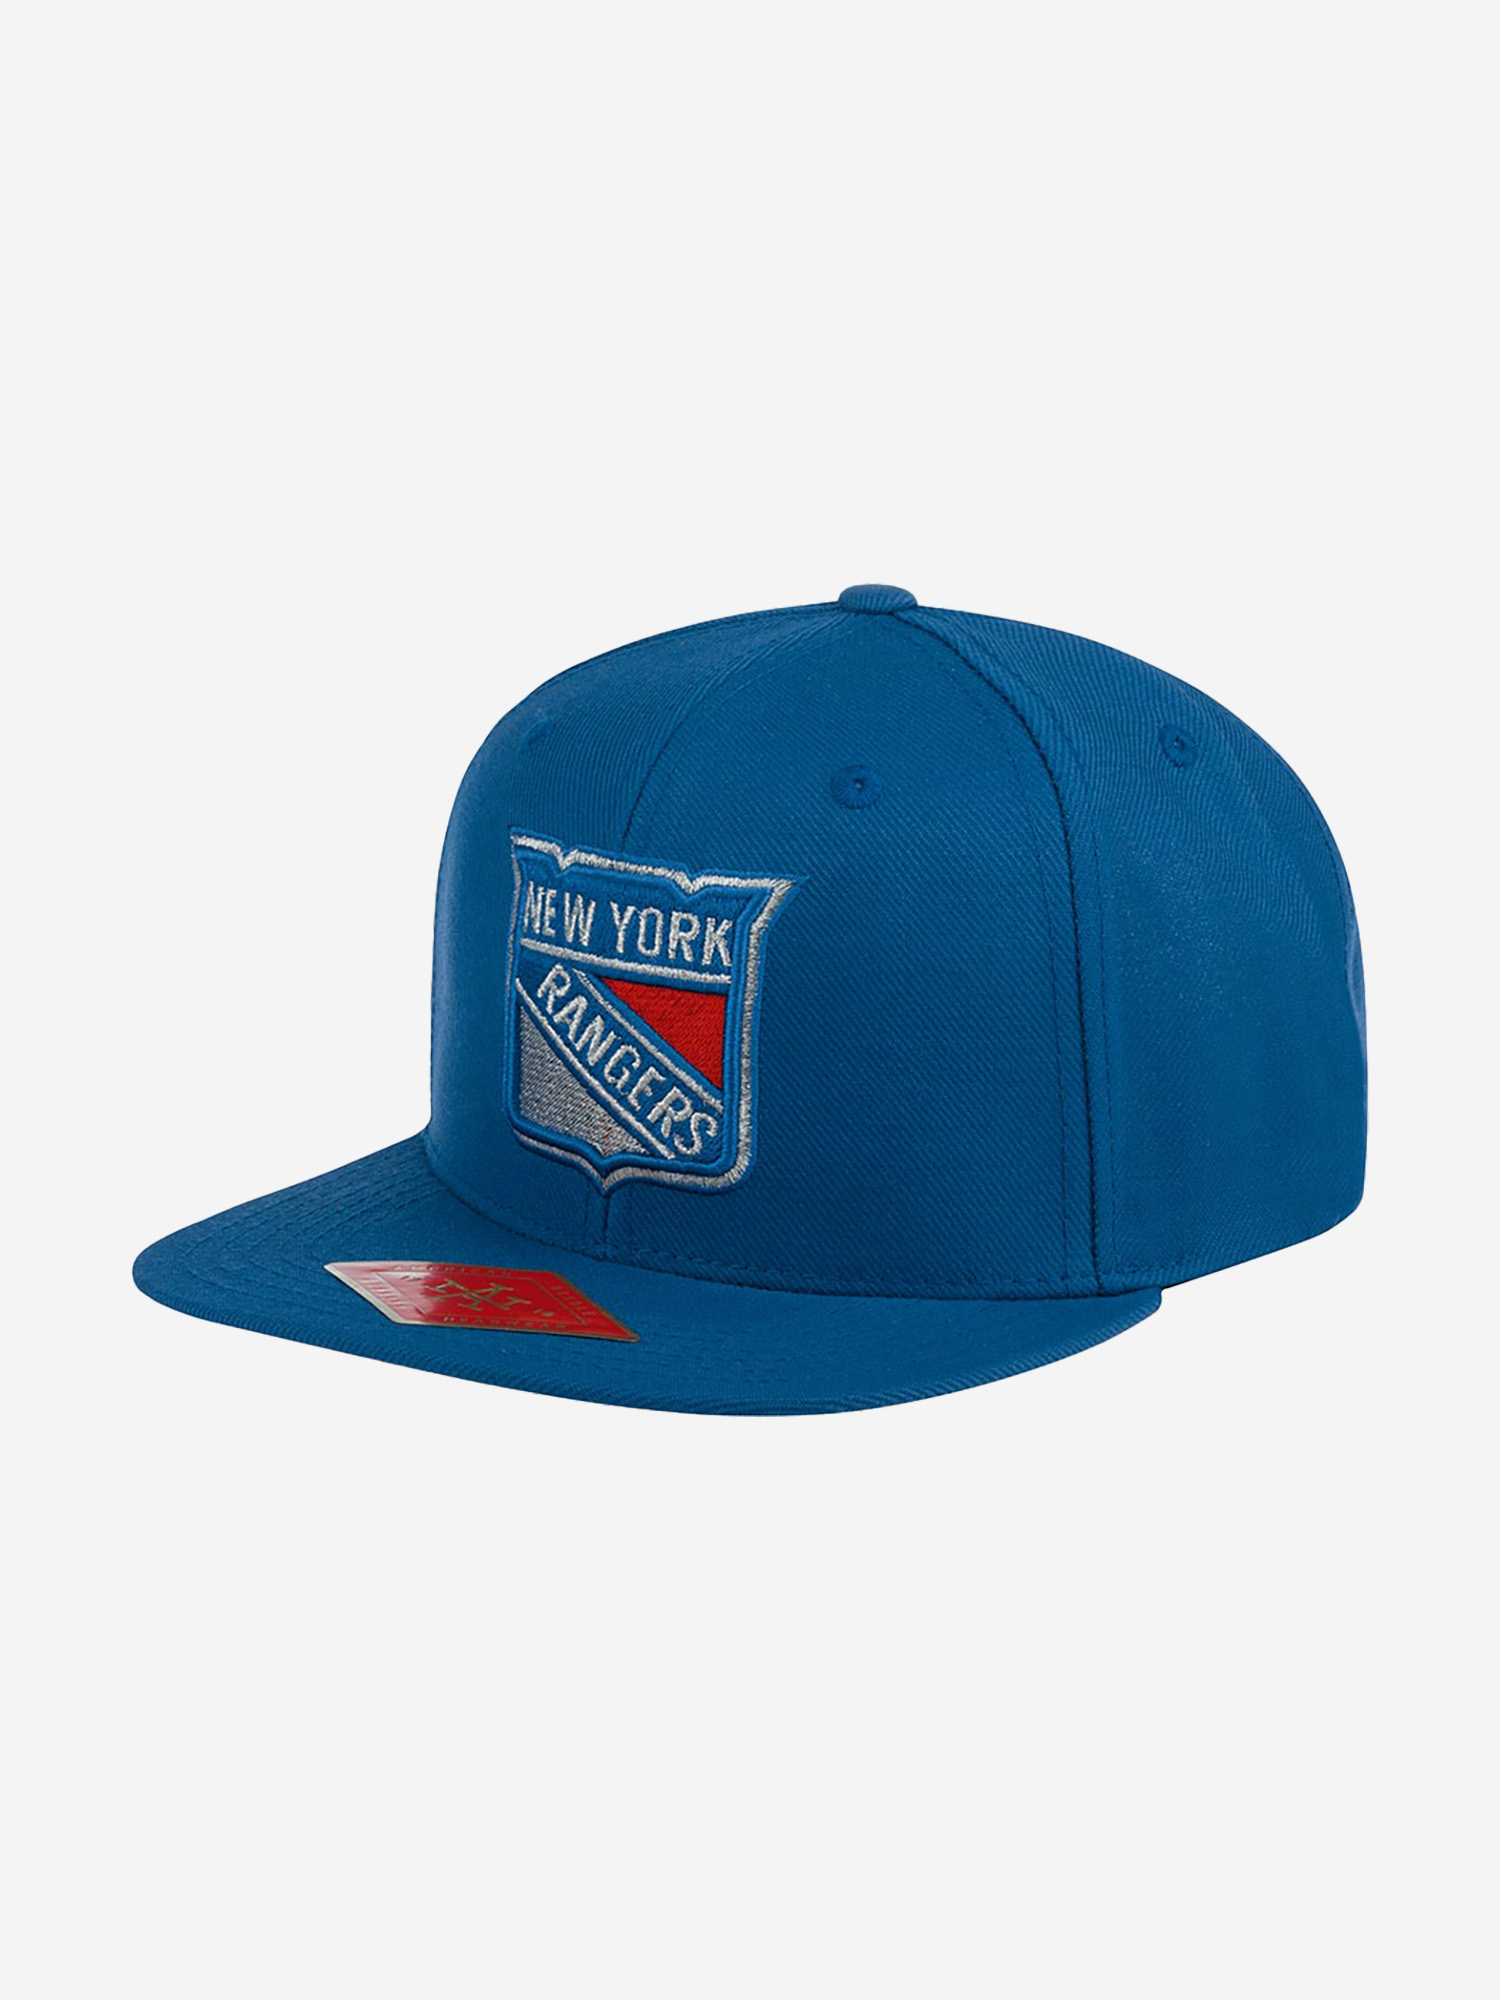 Бейсболка с прямым козырьком AMERICAN NEEDLE 43672A-NYR New York Rangers Stafford NHL (синий), Синий